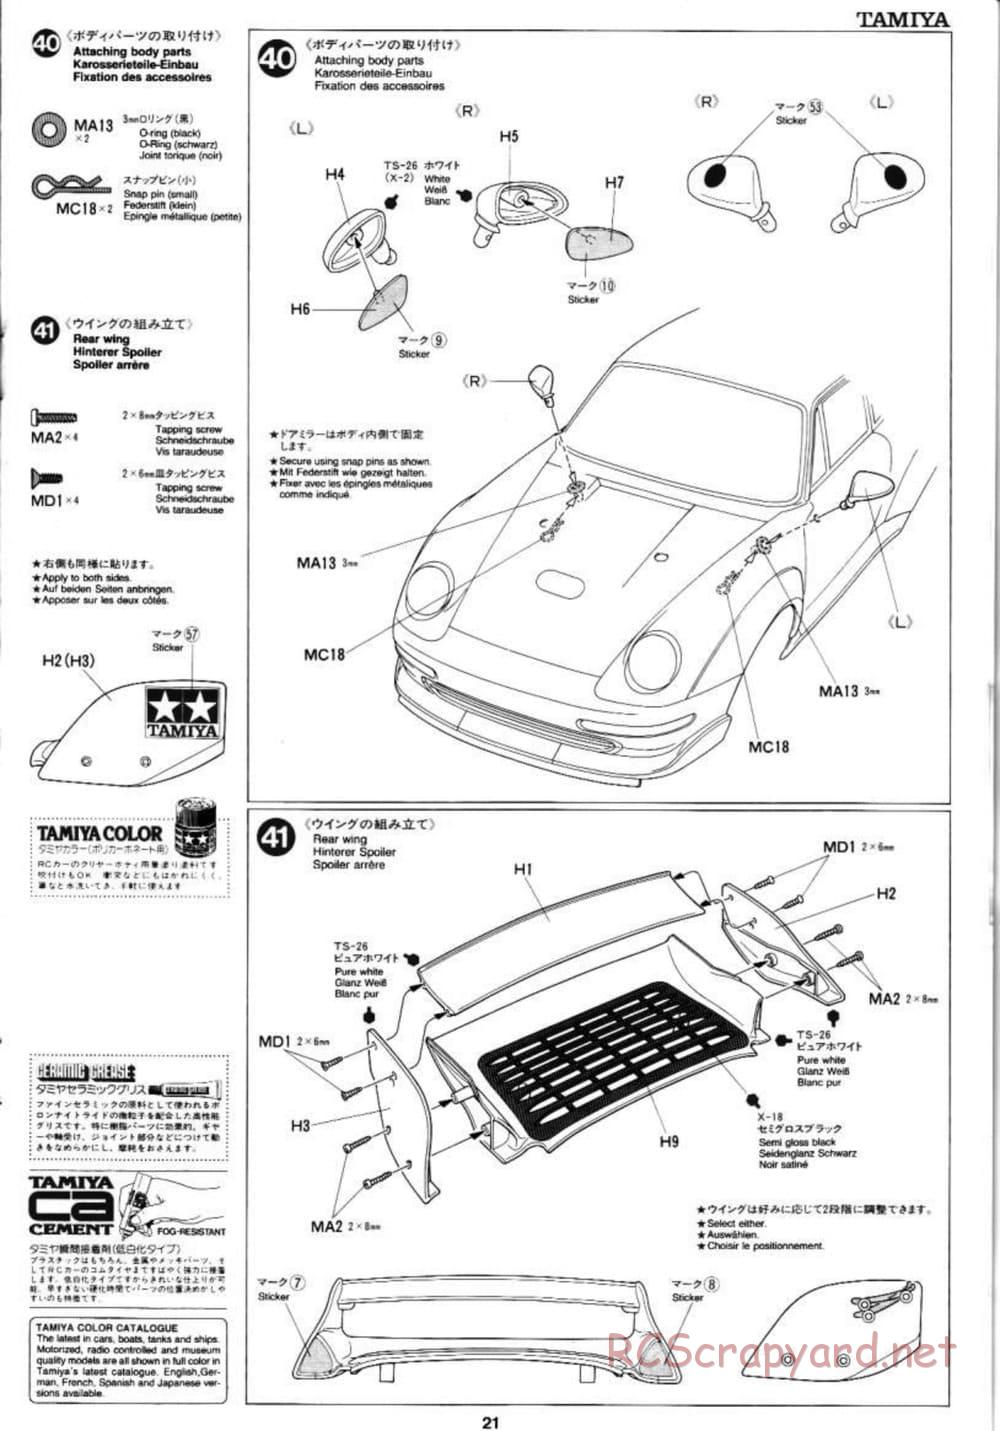 Tamiya - PIAA Porsche 911 - TA-03RS Chassis - Manual - Page 21